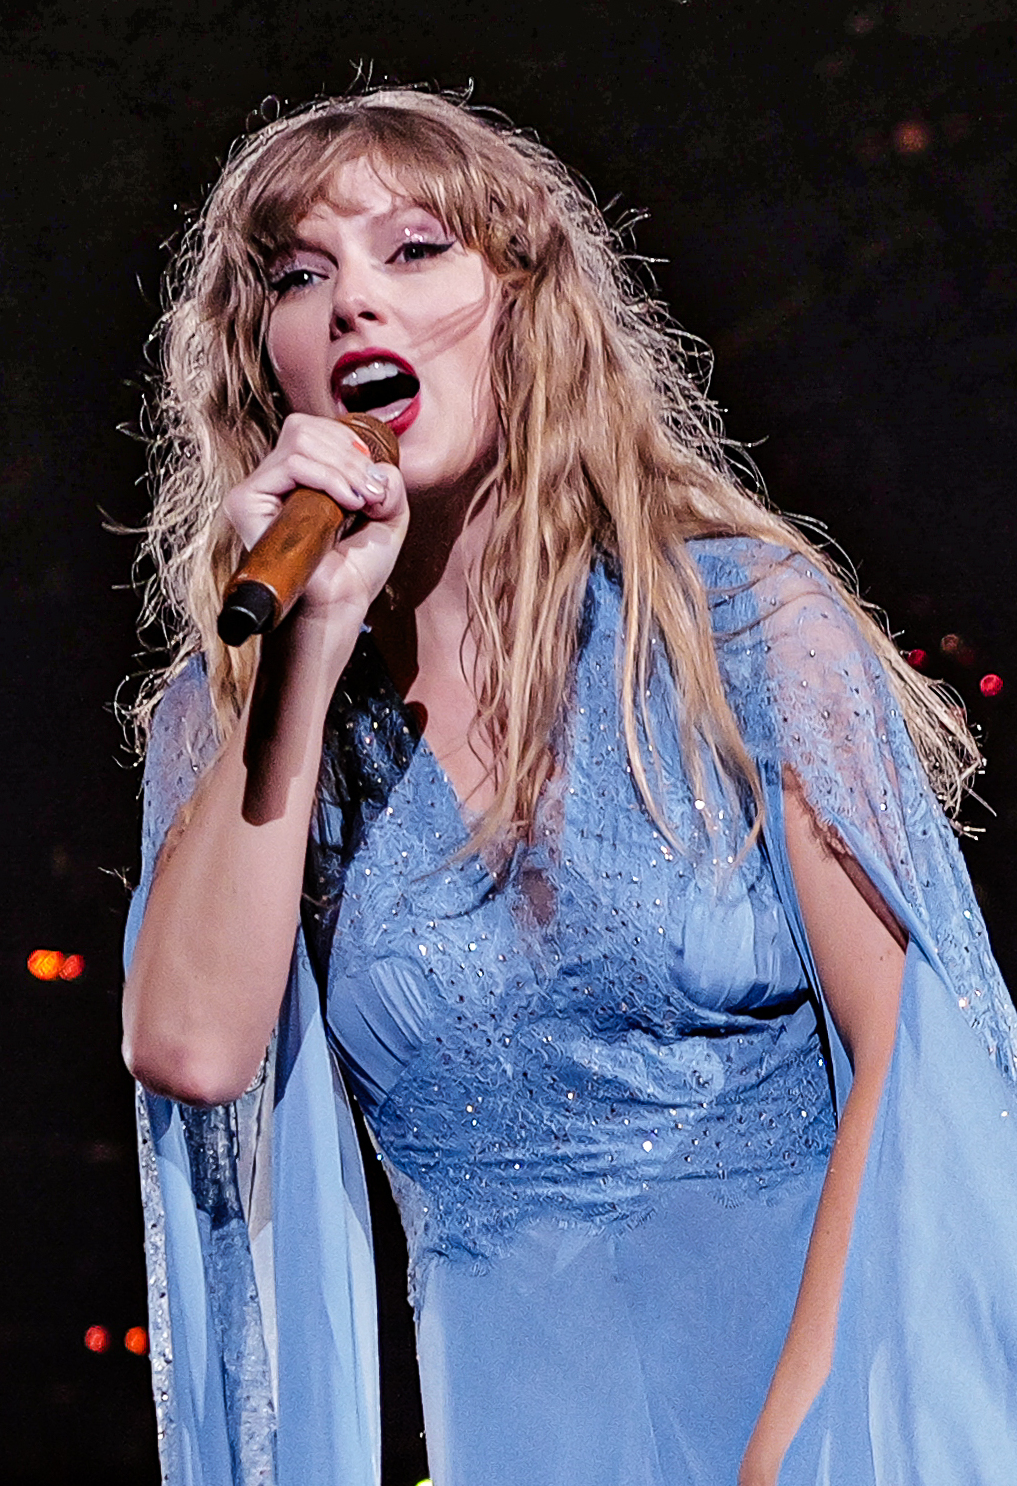 Ficheiro:Taylor Swift The Eras Tour The Folklore Set Era (53109912930)  (cropped).jpg – Wikipédia, a enciclopédia livre